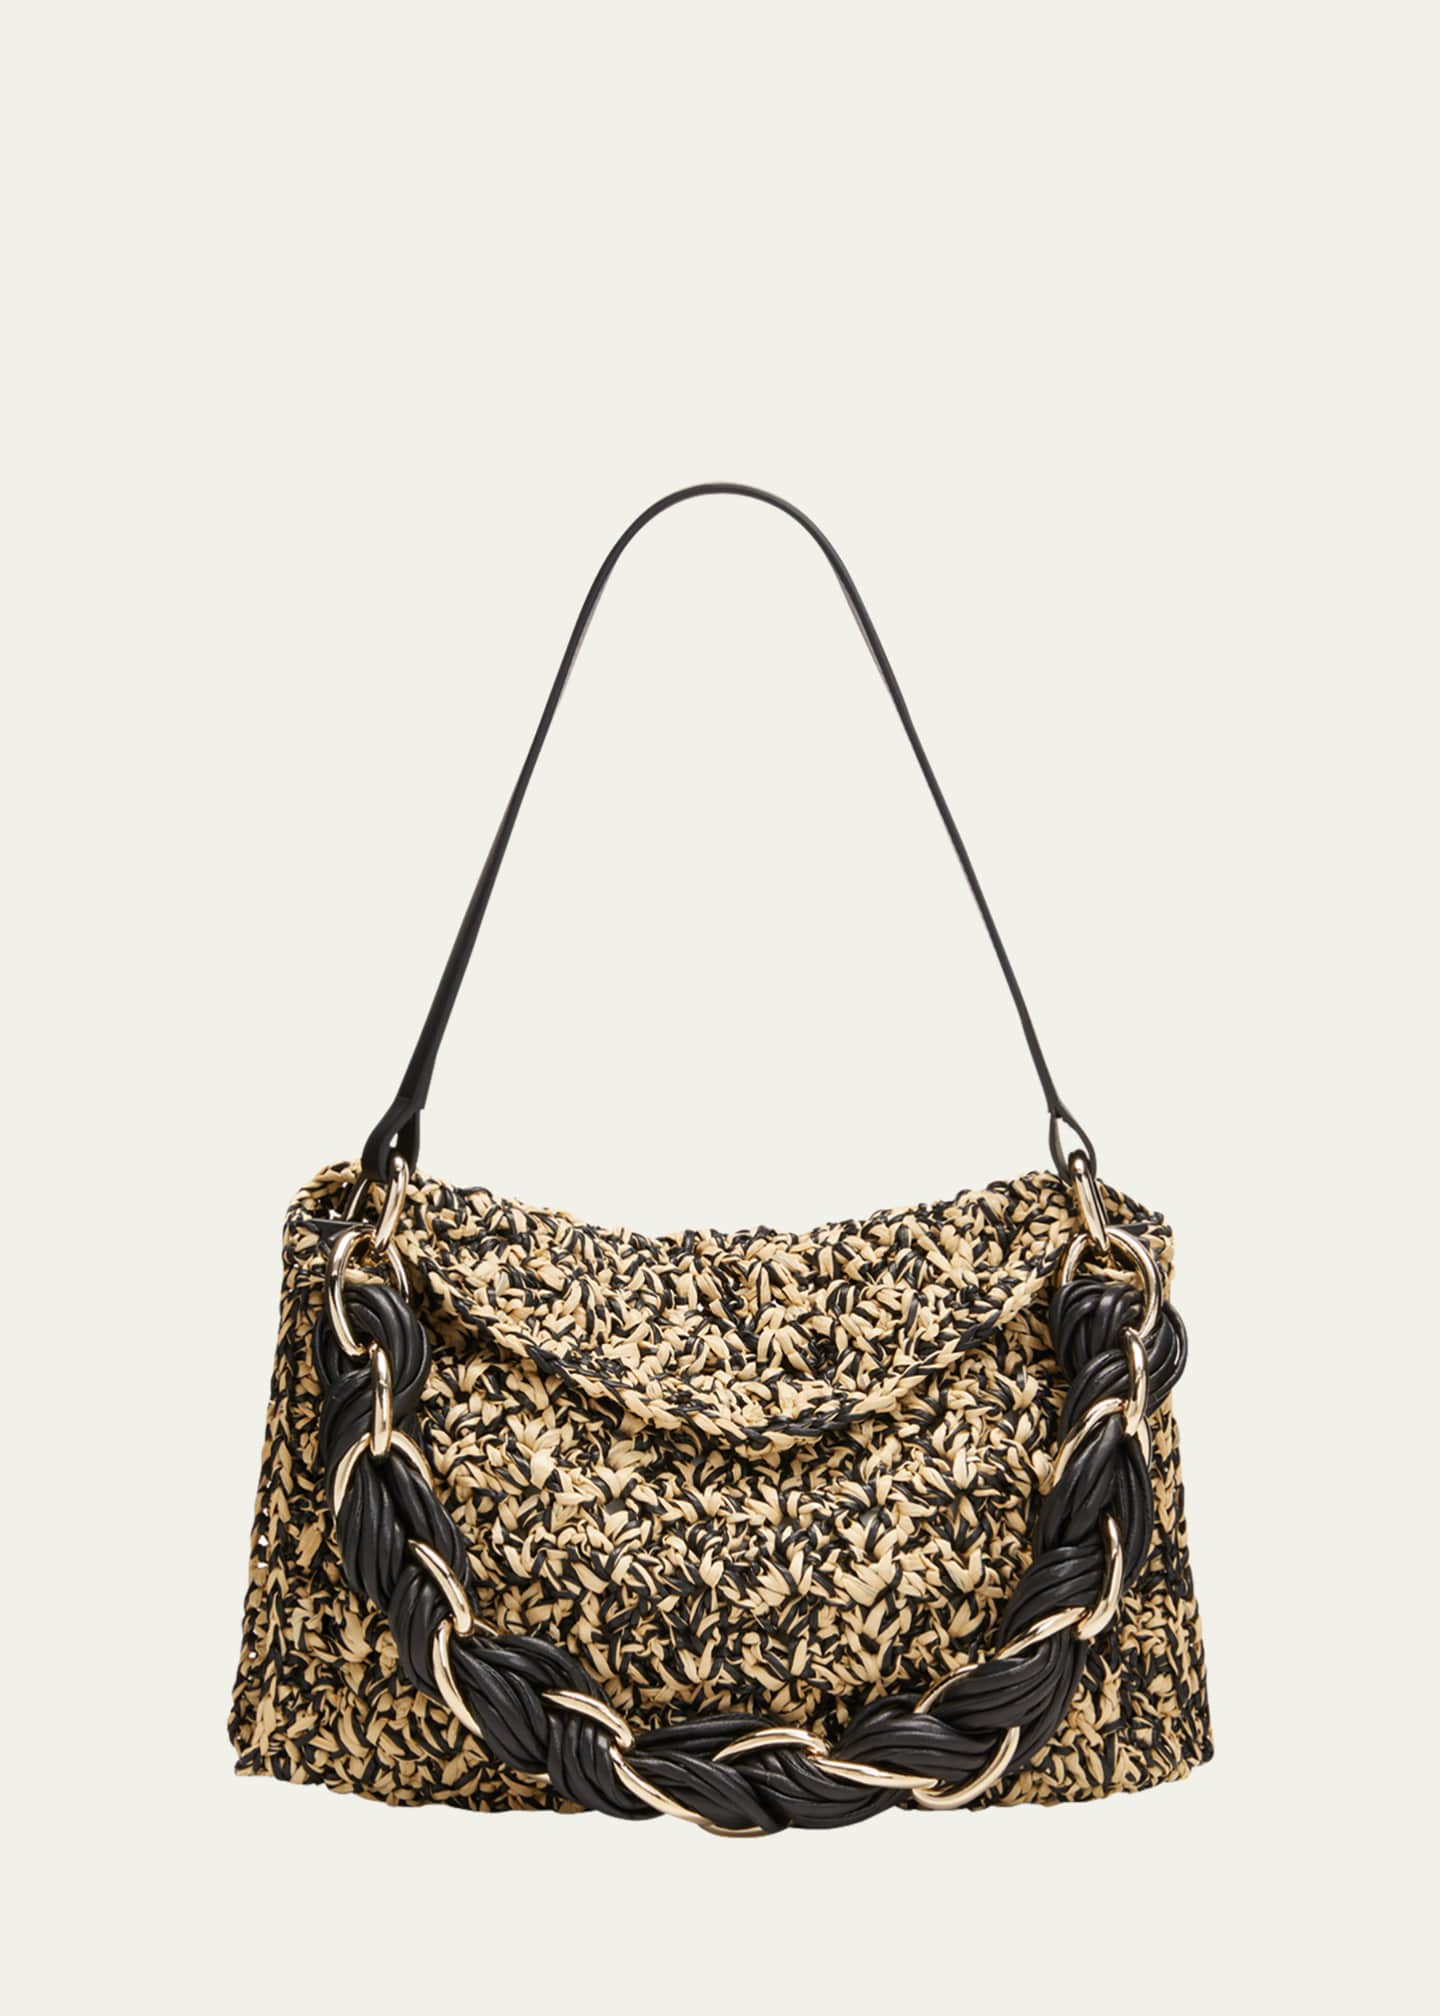 Prada Women's Crochet Shoulder Bag